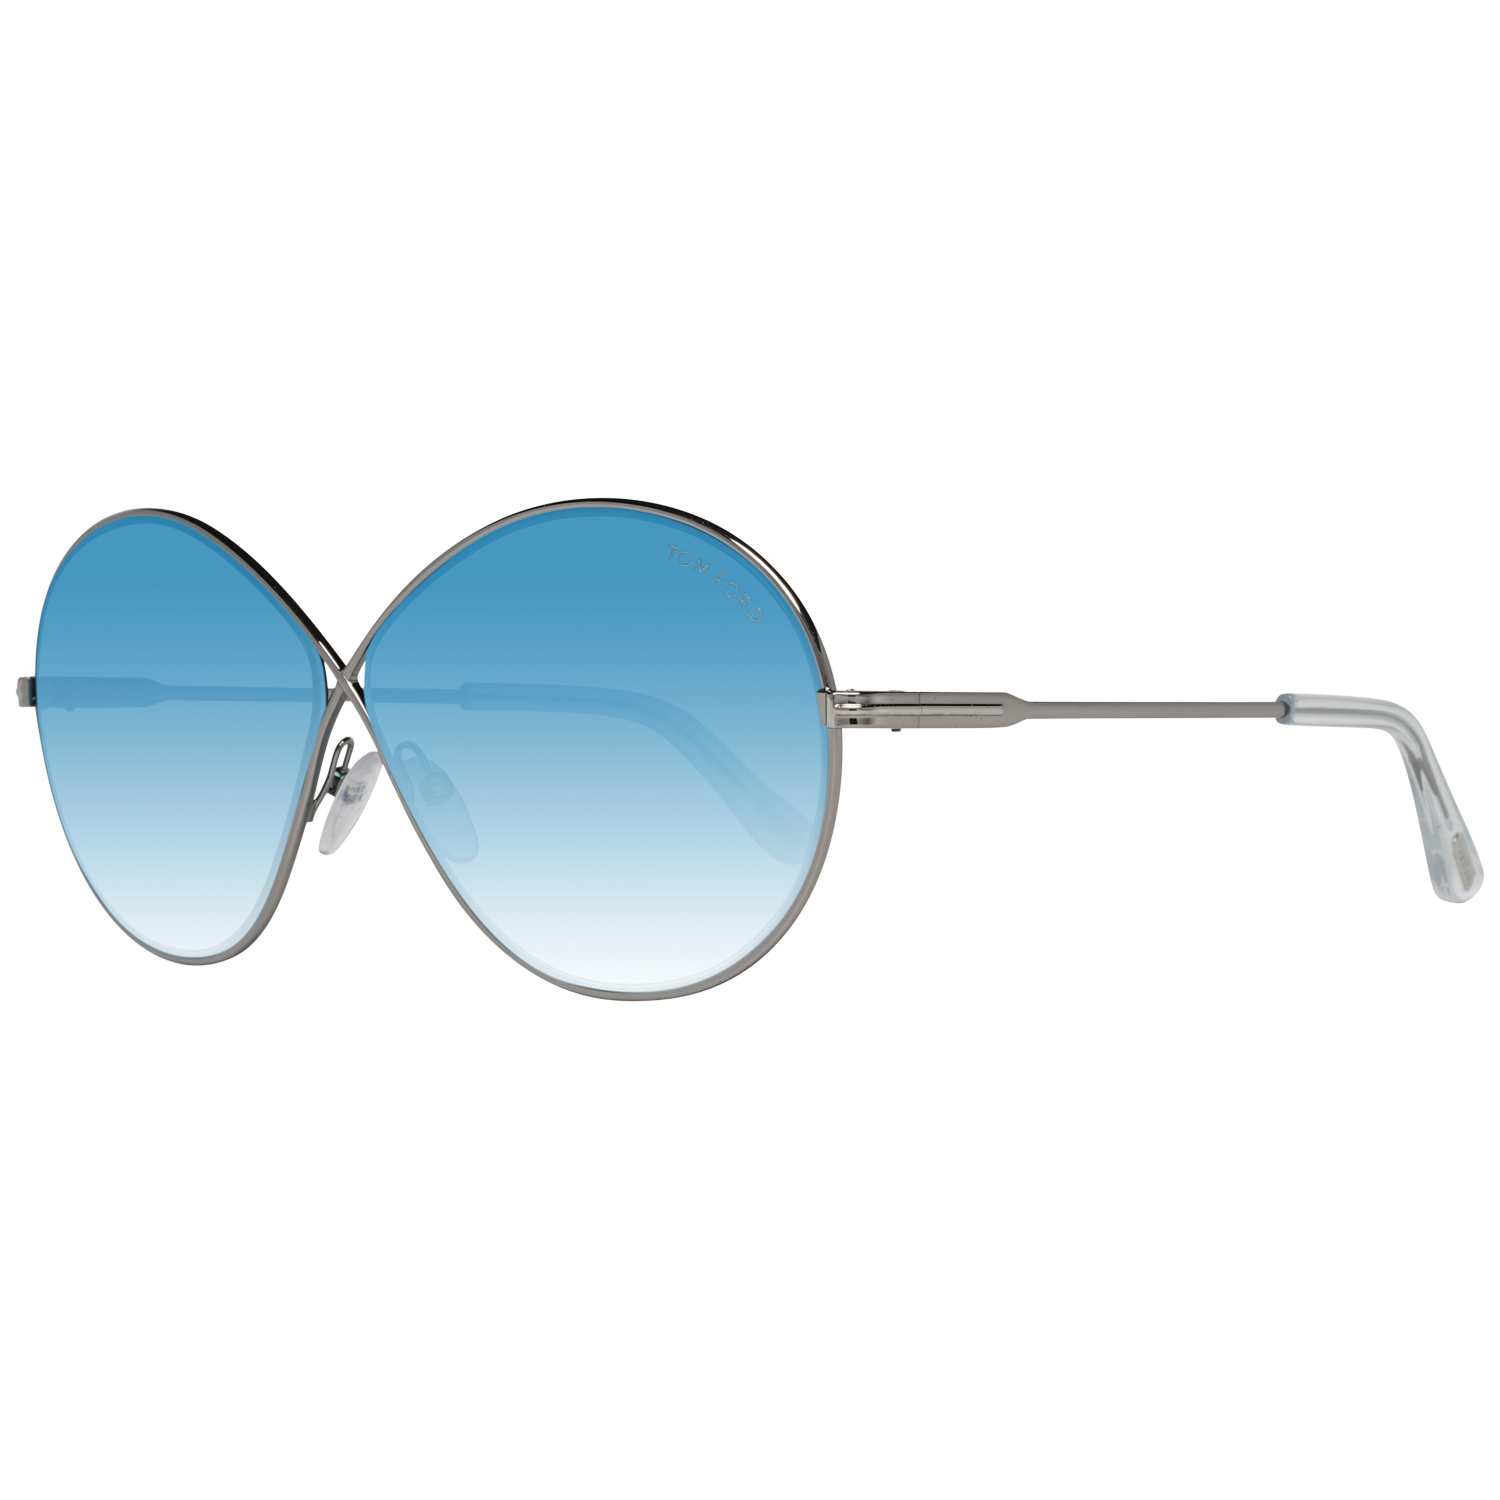 Tom Ford Sunglasses Tom Ford Sunglasses FT0564 14X 64 Eyeglasses Eyewear UK USA Australia 